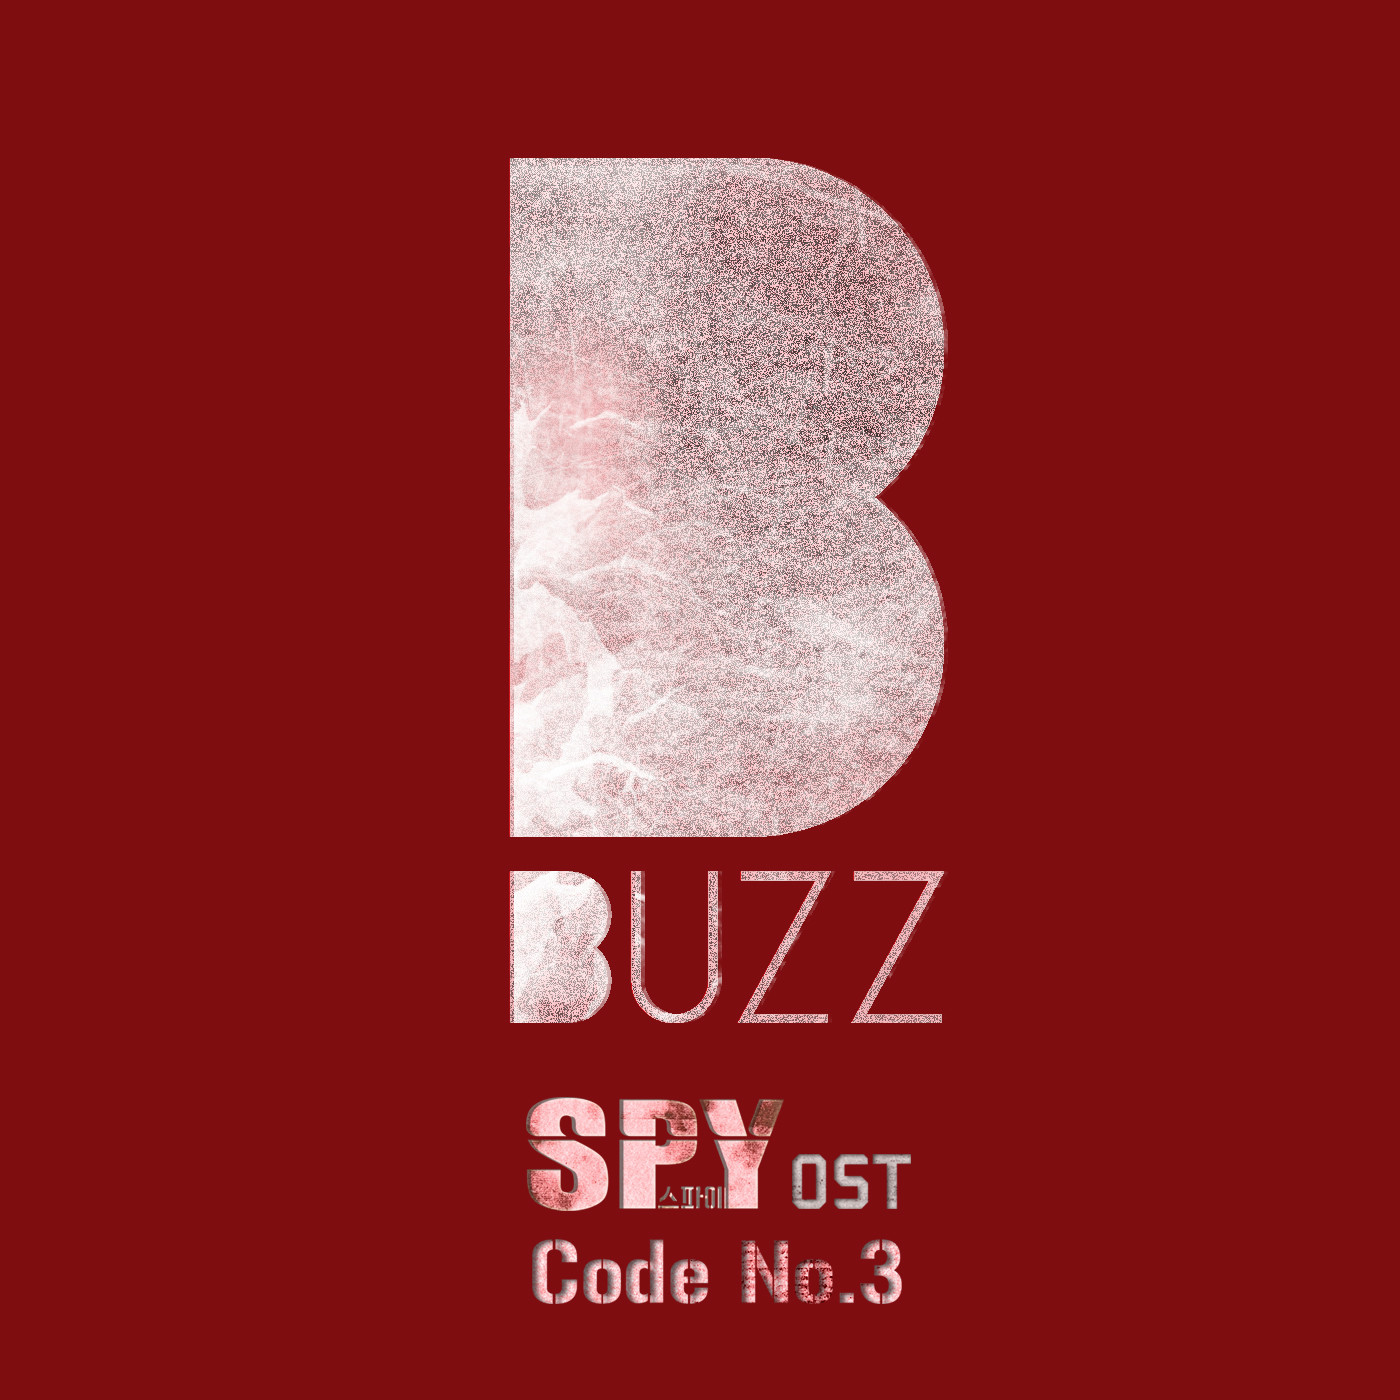 SPY OST Code No.3